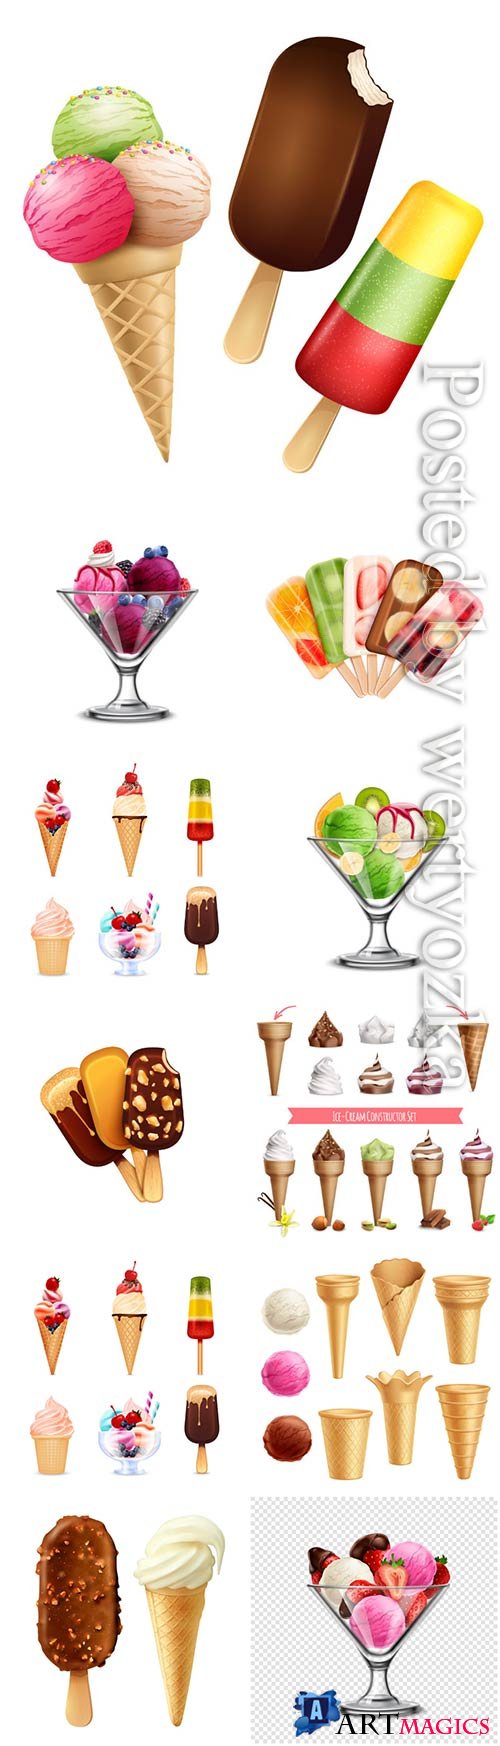 Ice cream platter, chocolate and vanilla ice cream with berries in vector